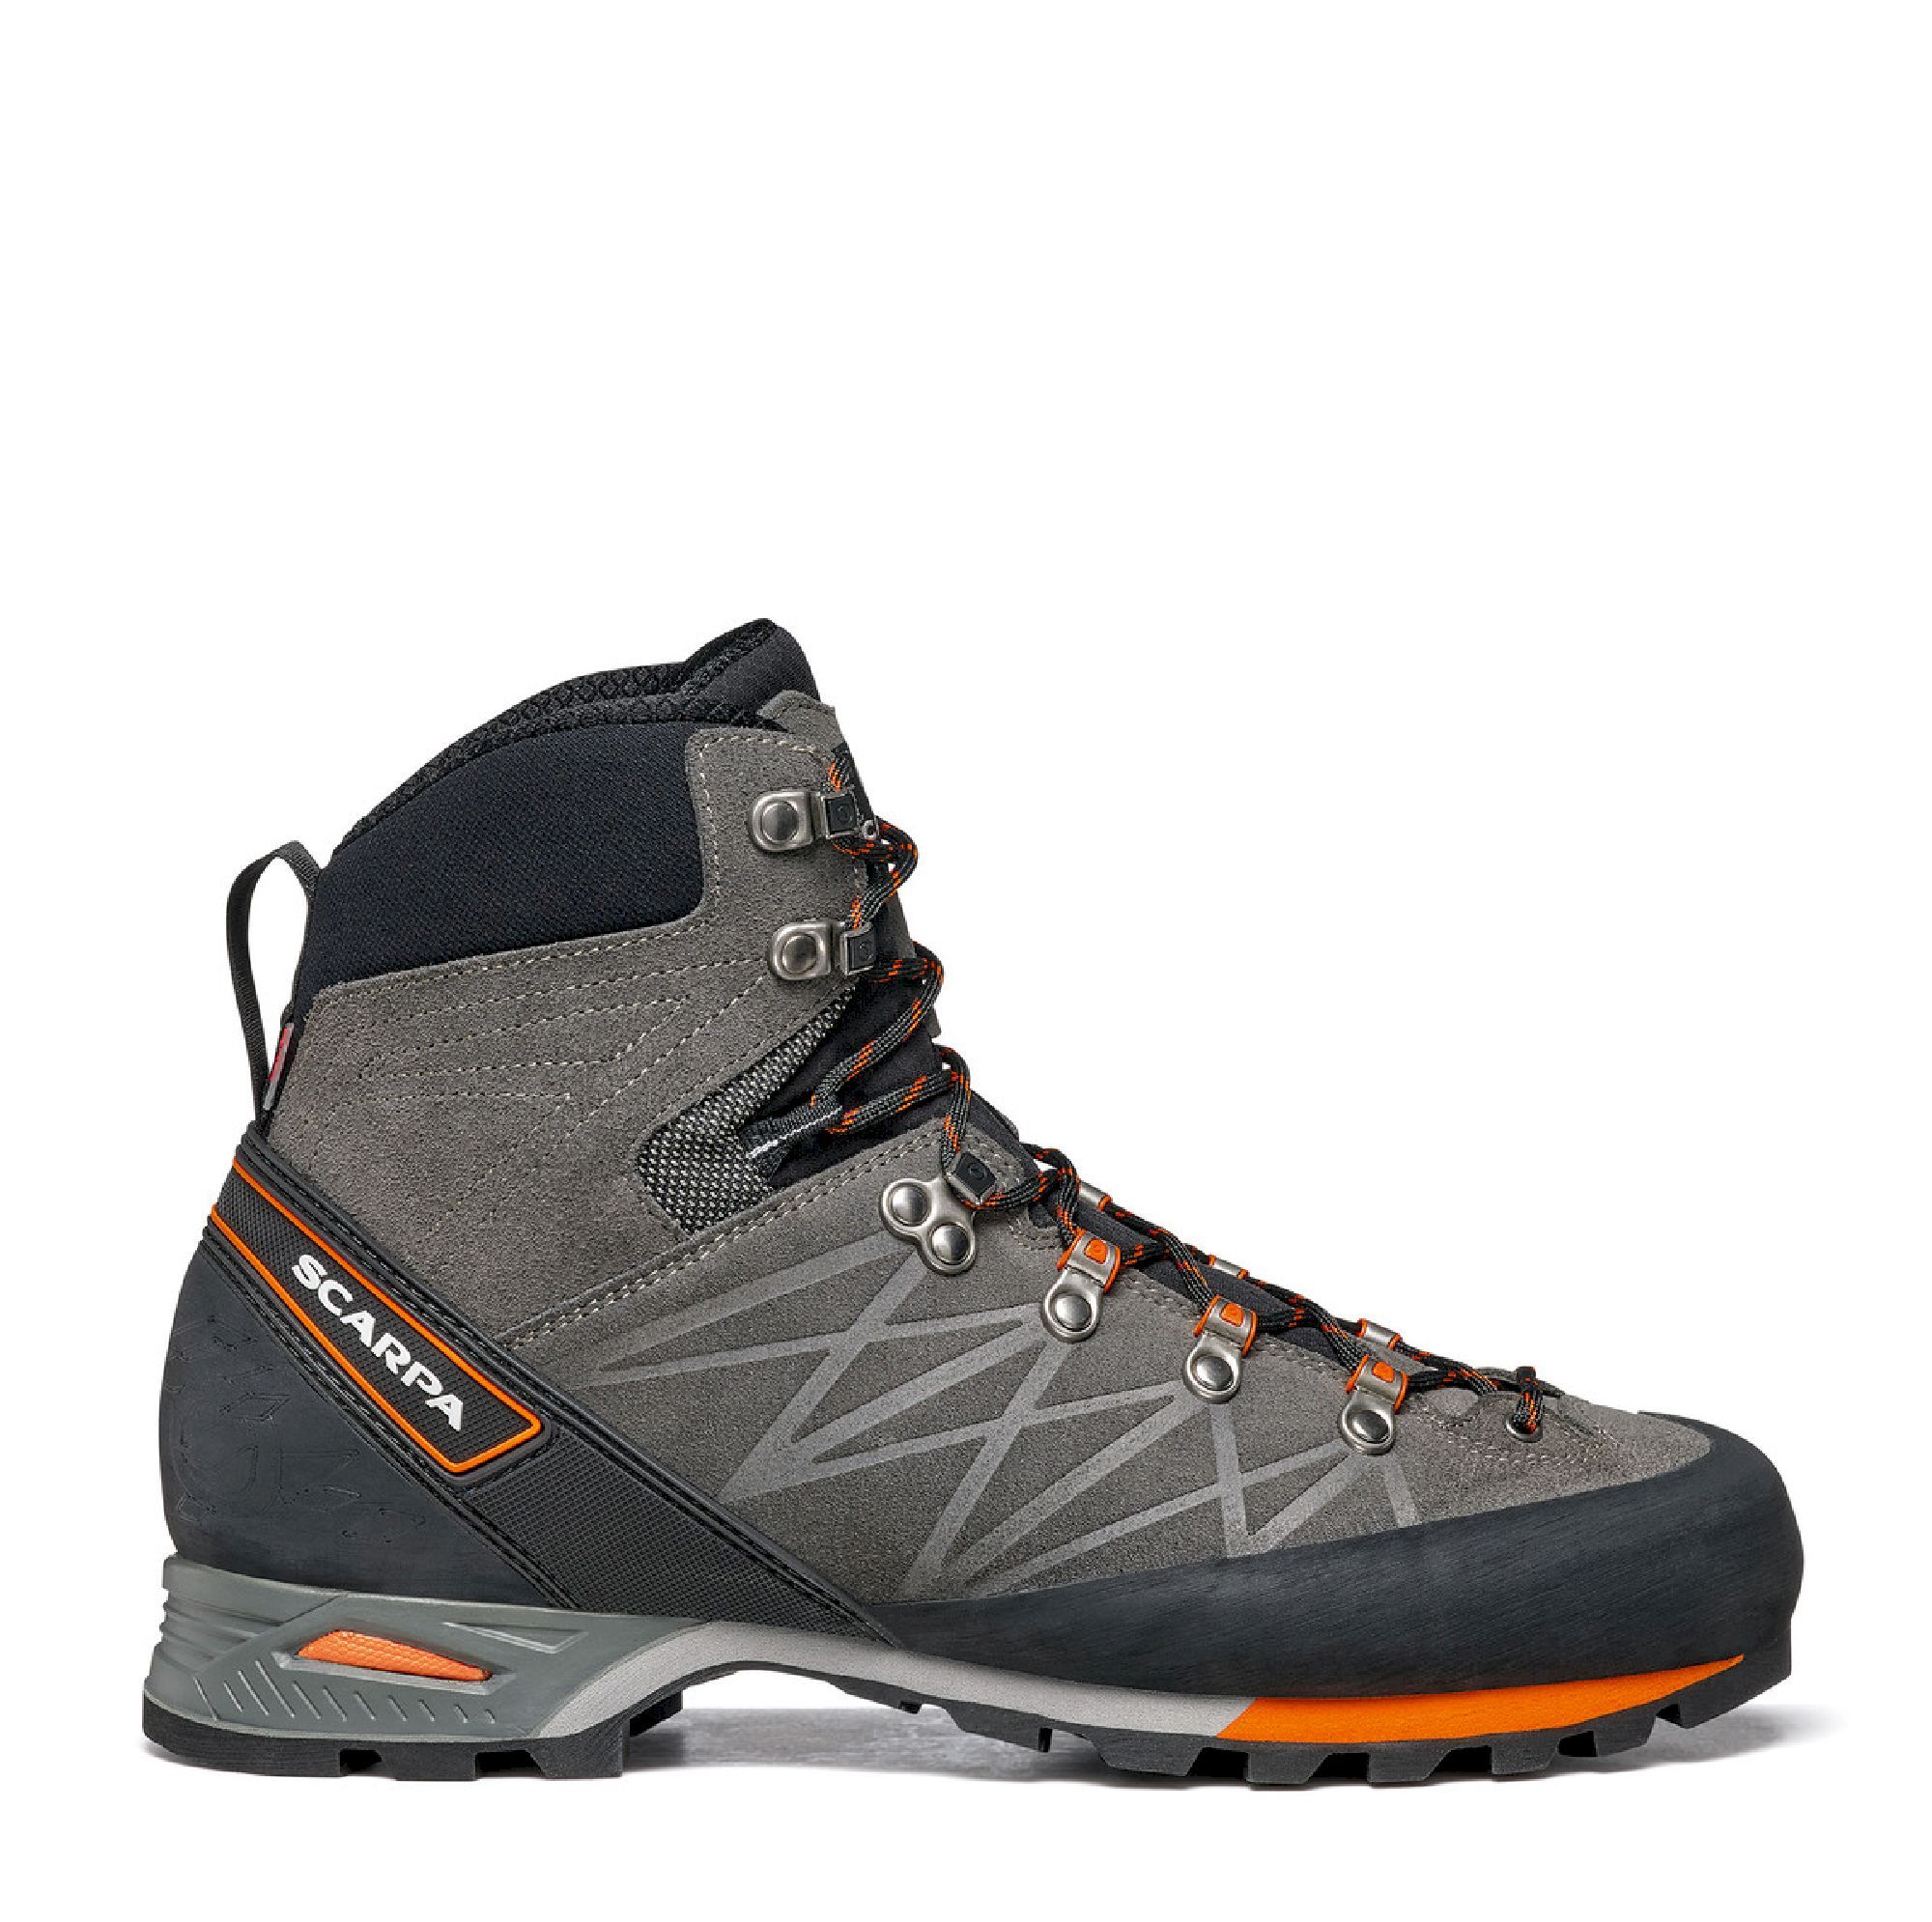 Scarpa Marmolada Pro HD - Trekking boots - Men's